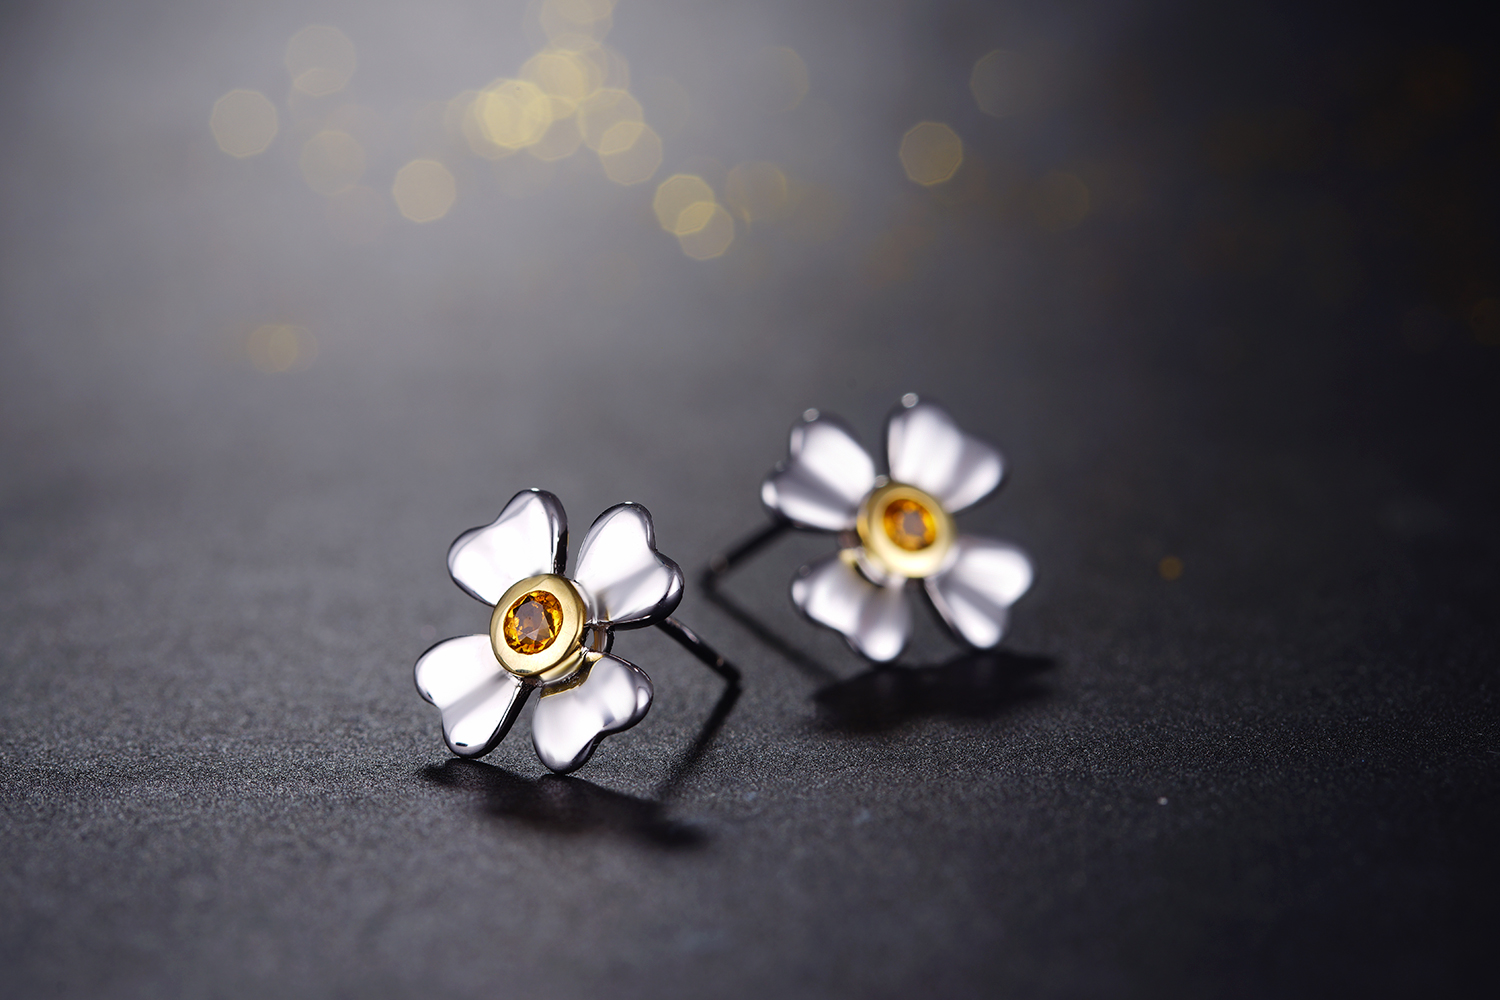 Fashion Clover Flowers Earrings Design 925 Sterling Silver Elegant Female Gift Earring Jewelry